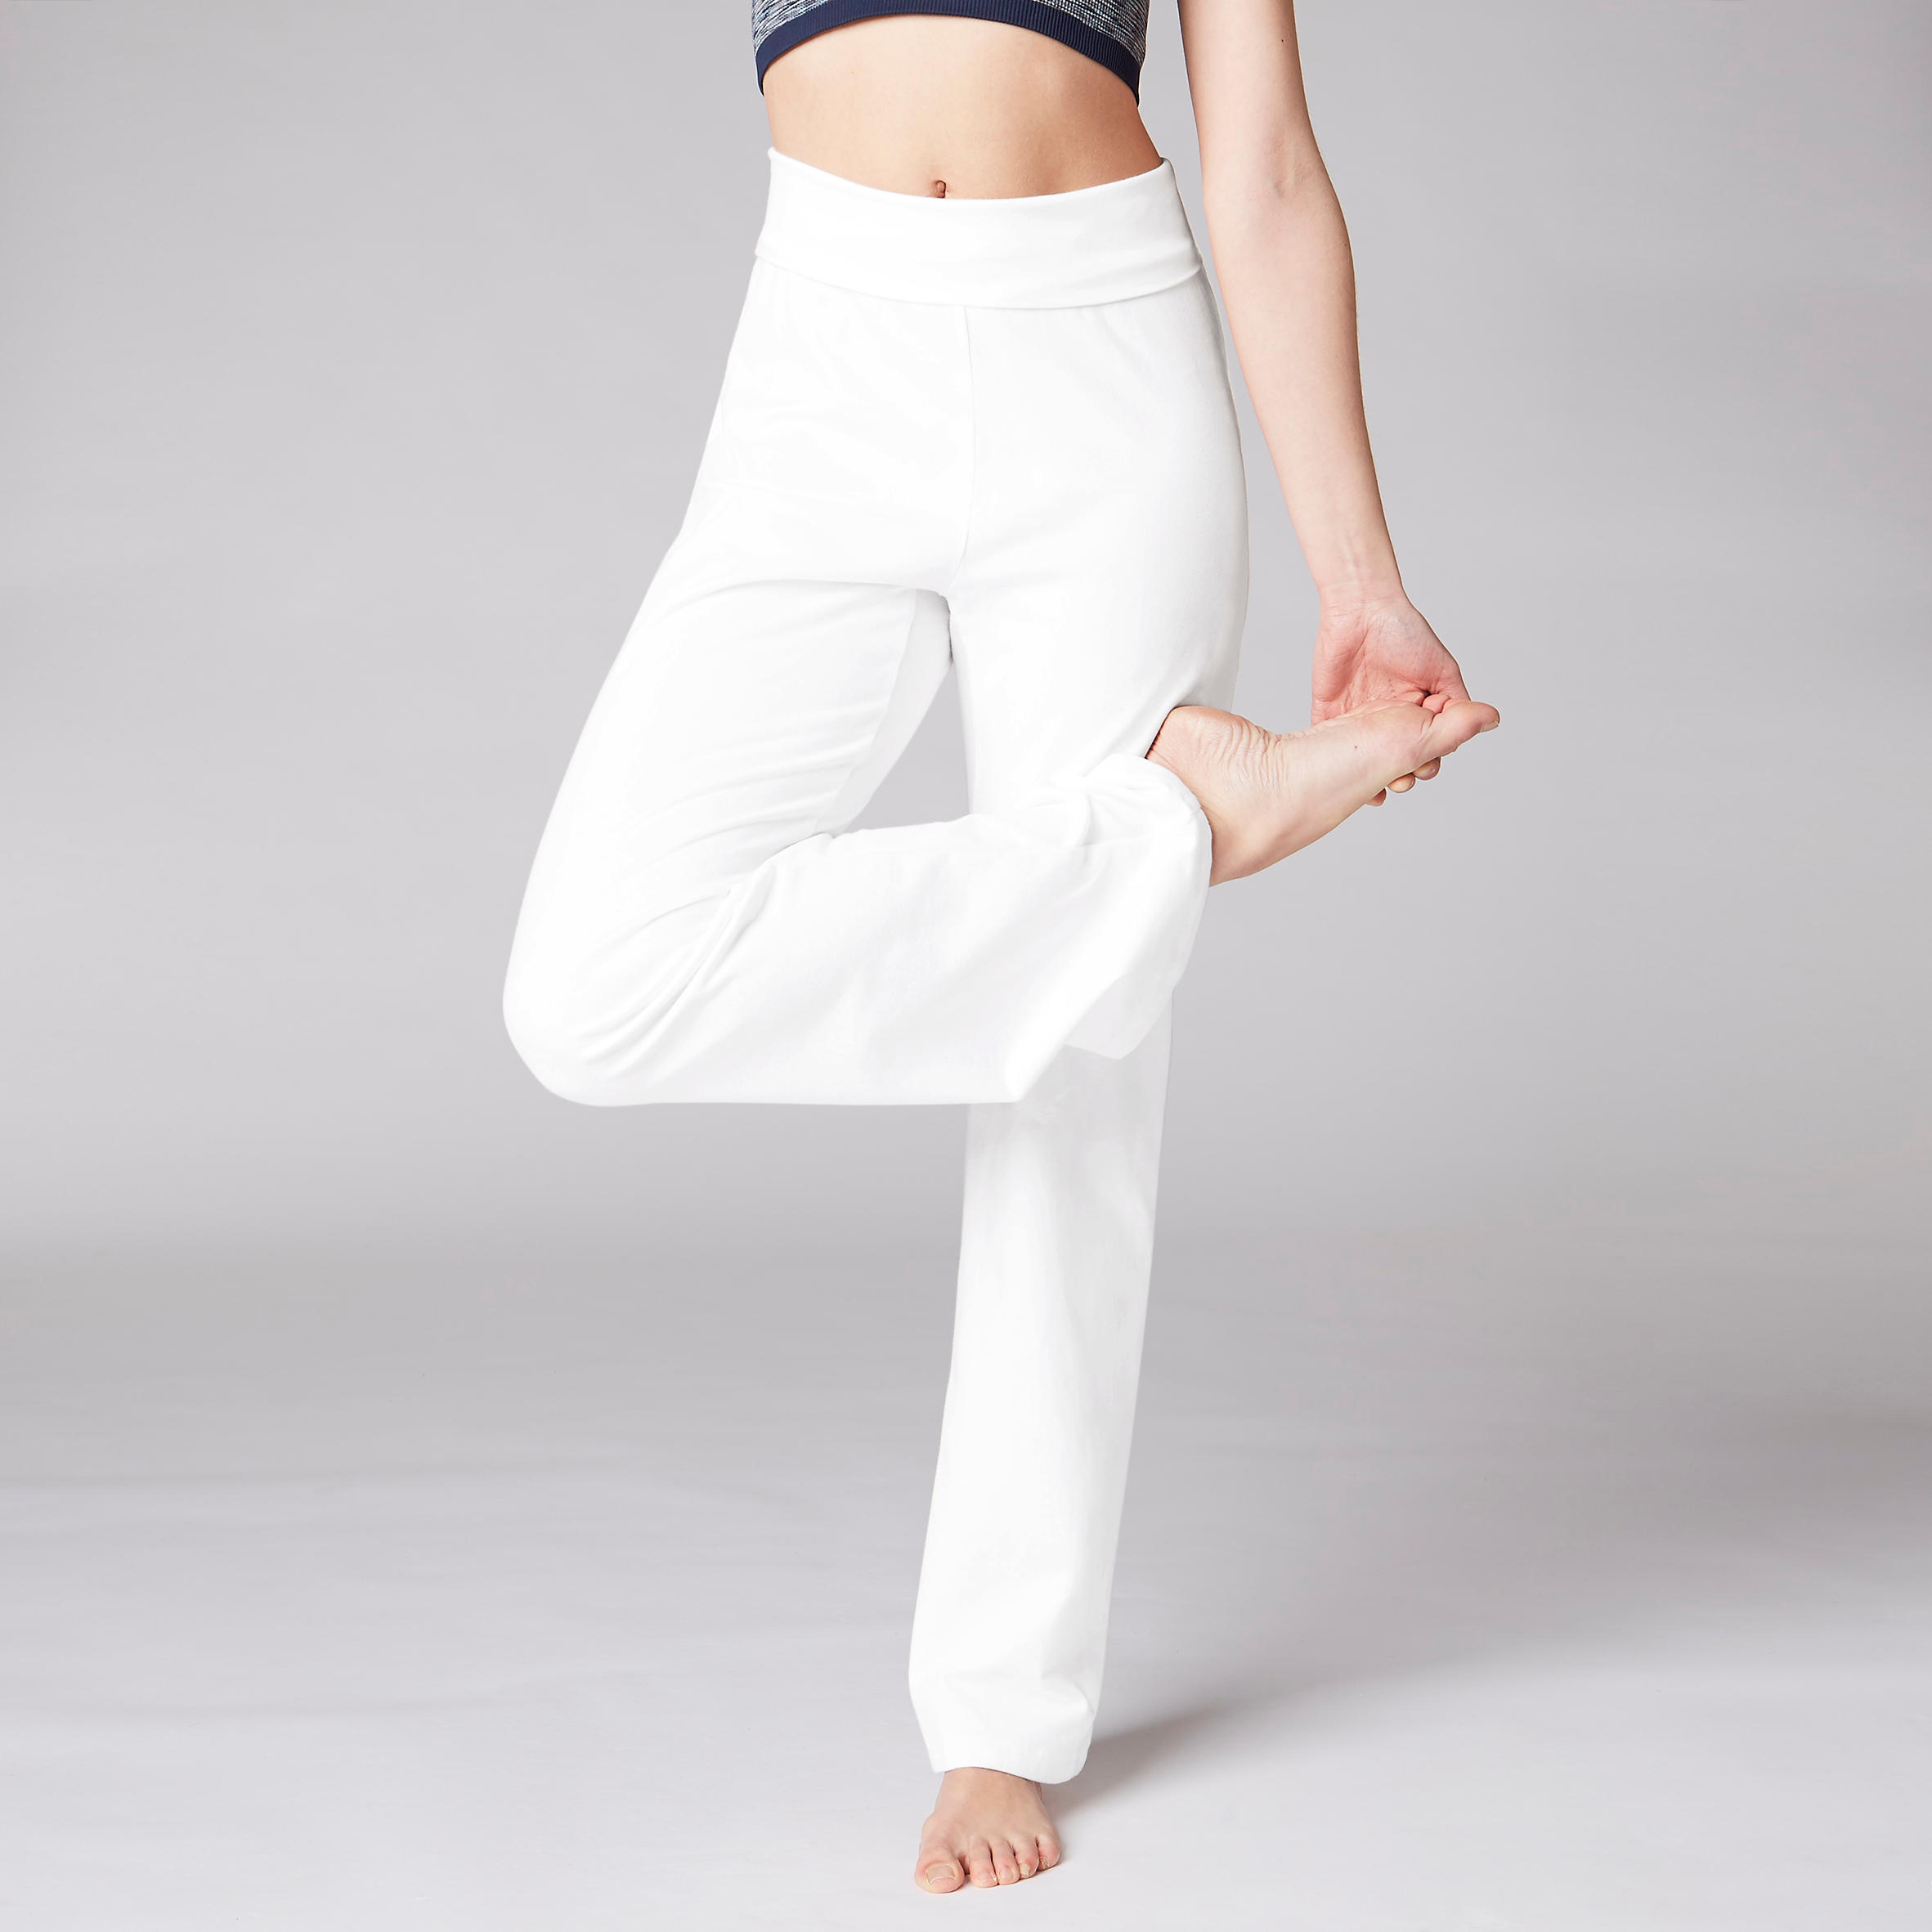 Women's Yoga Pants - Beige - Eggshell - Kimjaly - Decathlon